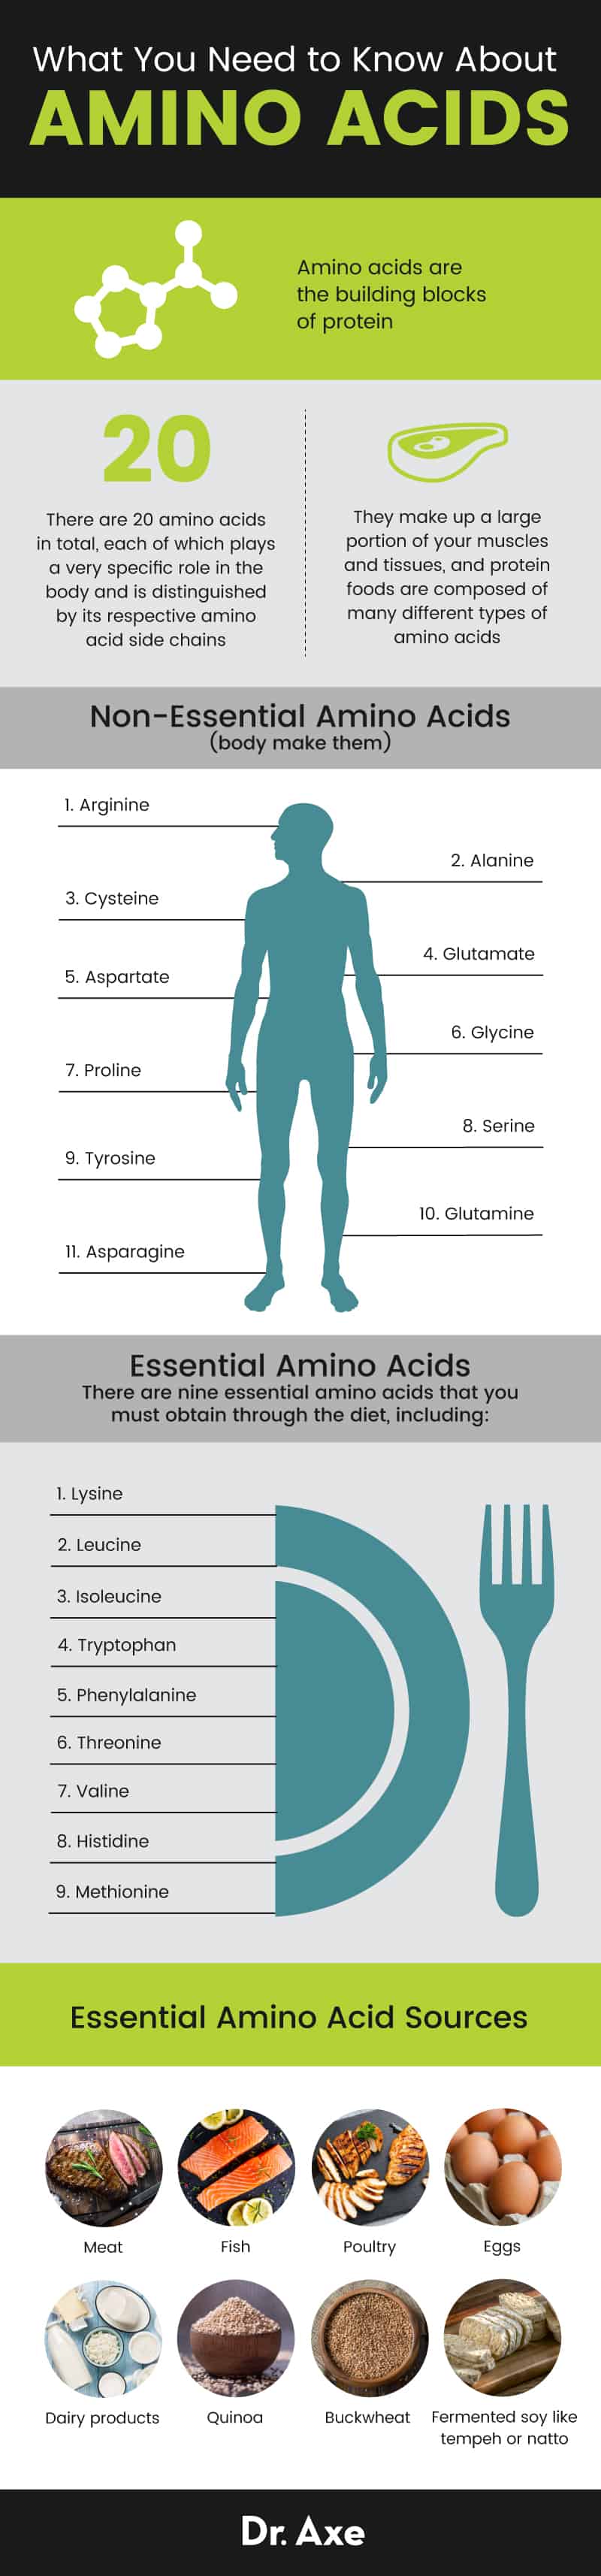 Essential amino acids - Dr. Axe